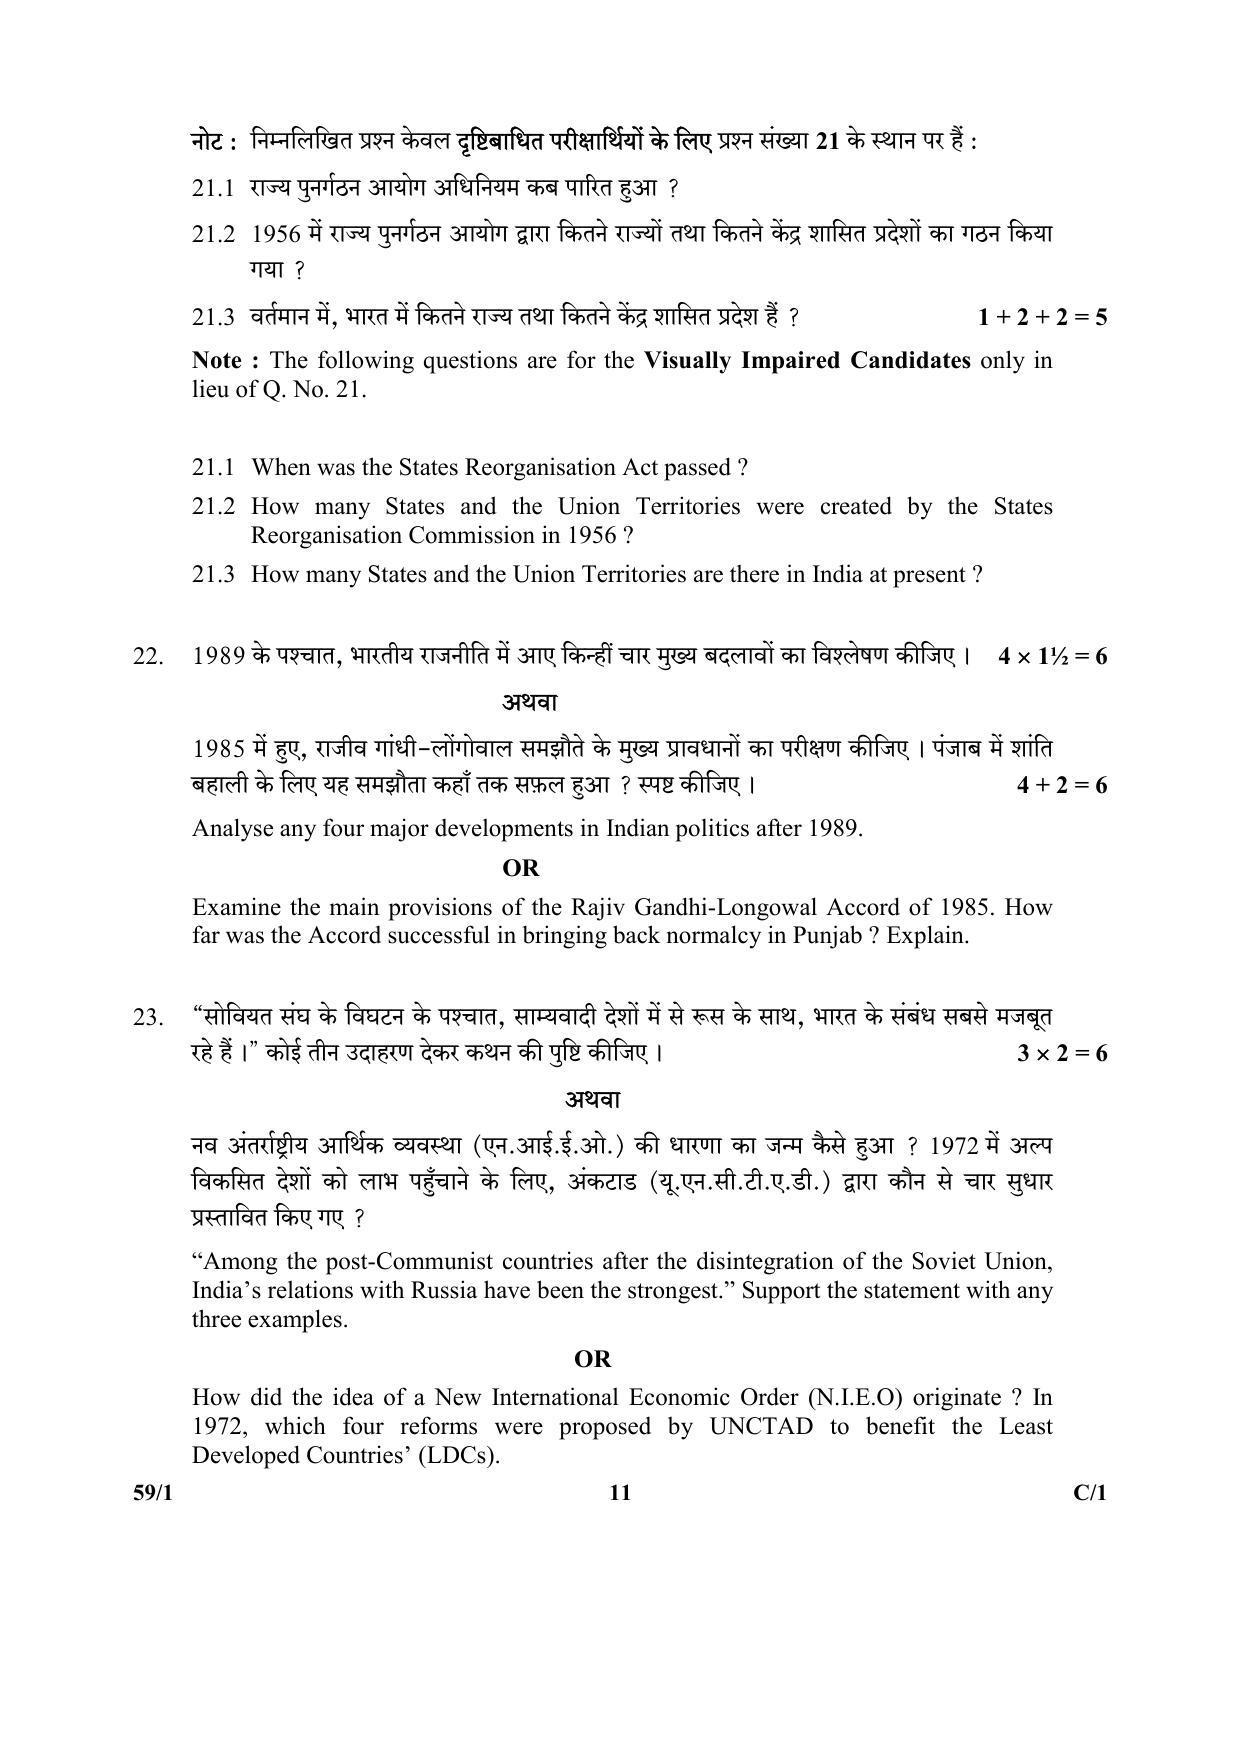 CBSE Class 12 221-1 Political Science_Punjabi 2018 Compartment Question Paper - Page 19